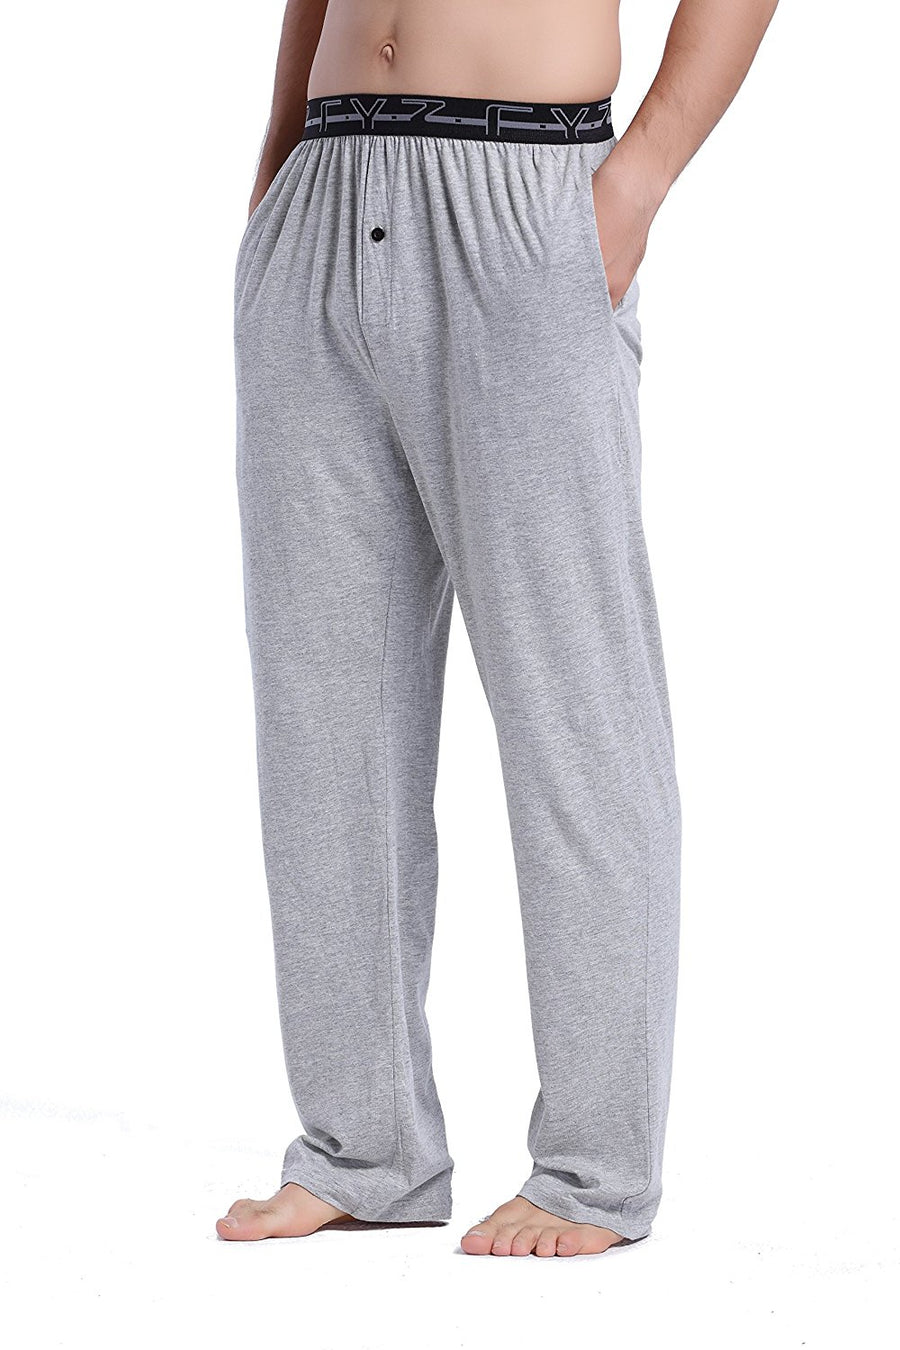 CYZ Mens 2-Pack 100% Cotton Knit Pajama Bottoms - Sleep/Lounge Shorts-BlackBurgundy-XL  : : Clothing, Shoes & Accessories